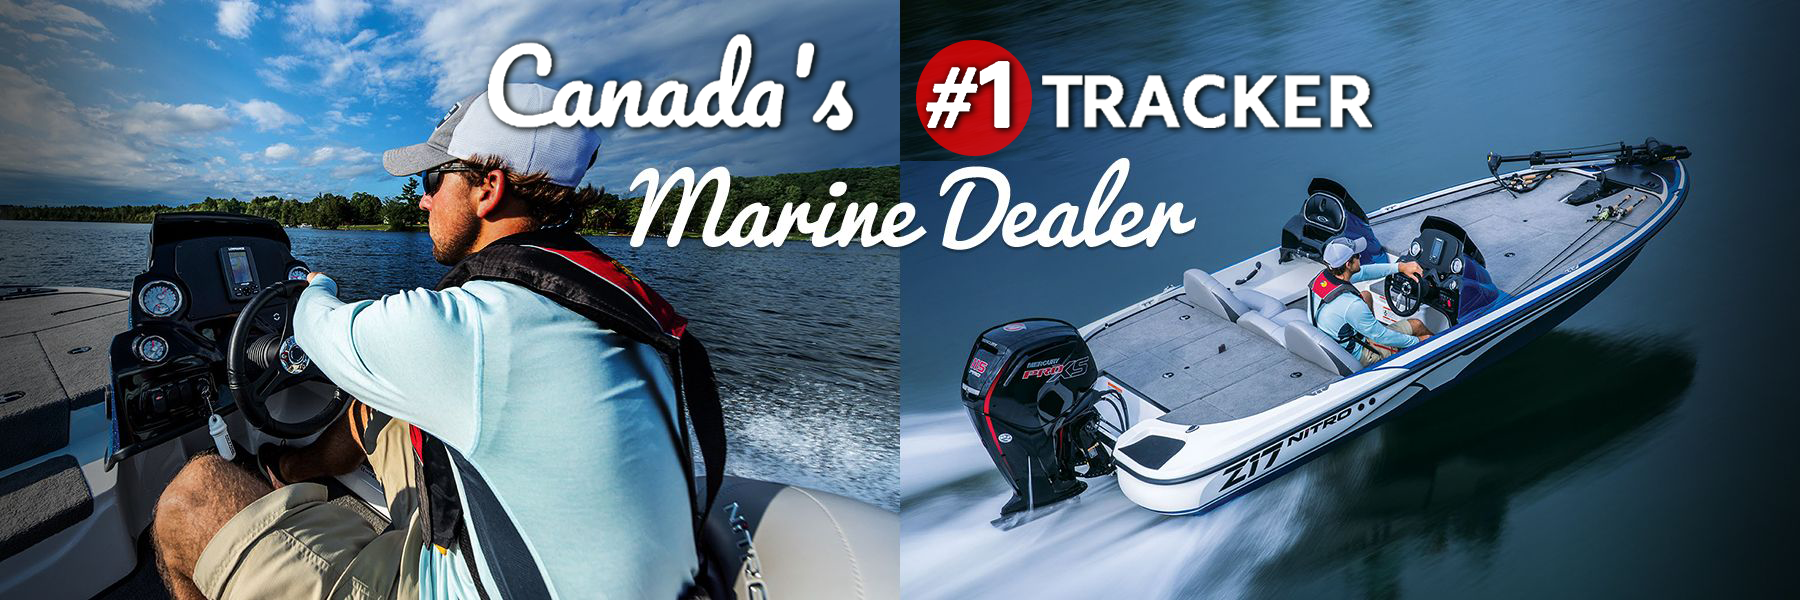 Exclusive Auto Marine - Canada's #1 Tracker Marine Dealer